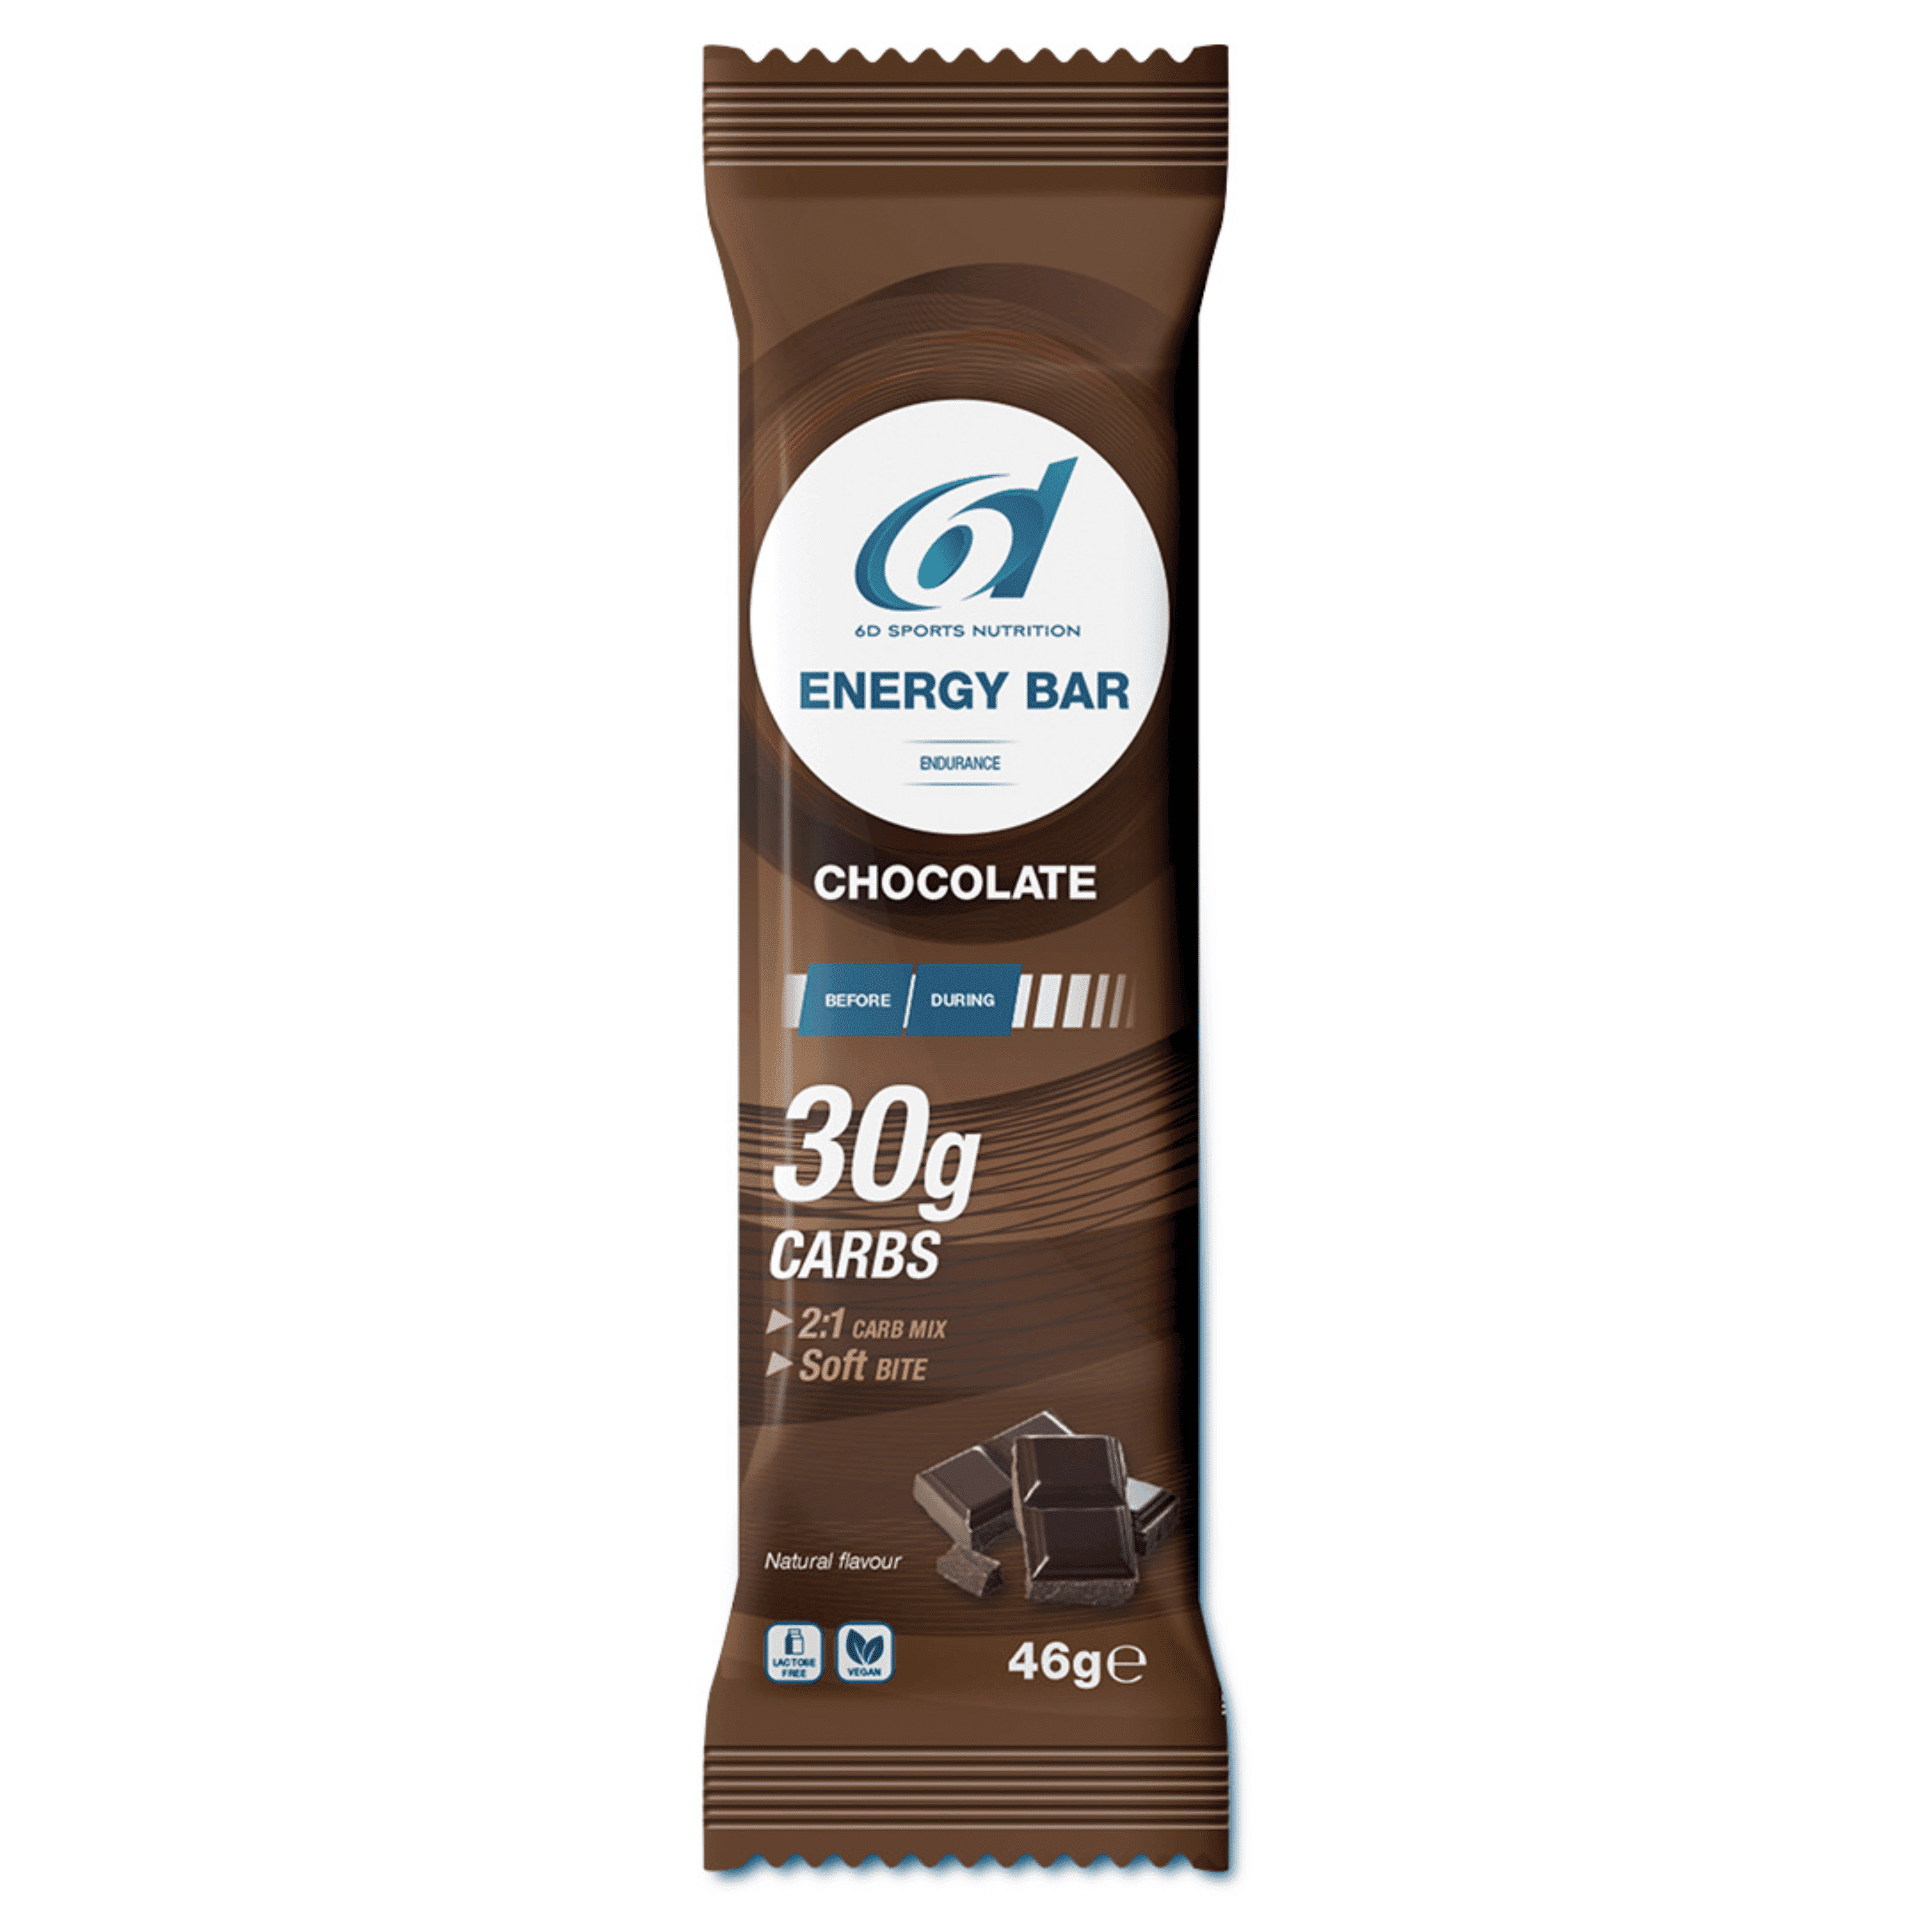 6d Energy Bar Chocolade